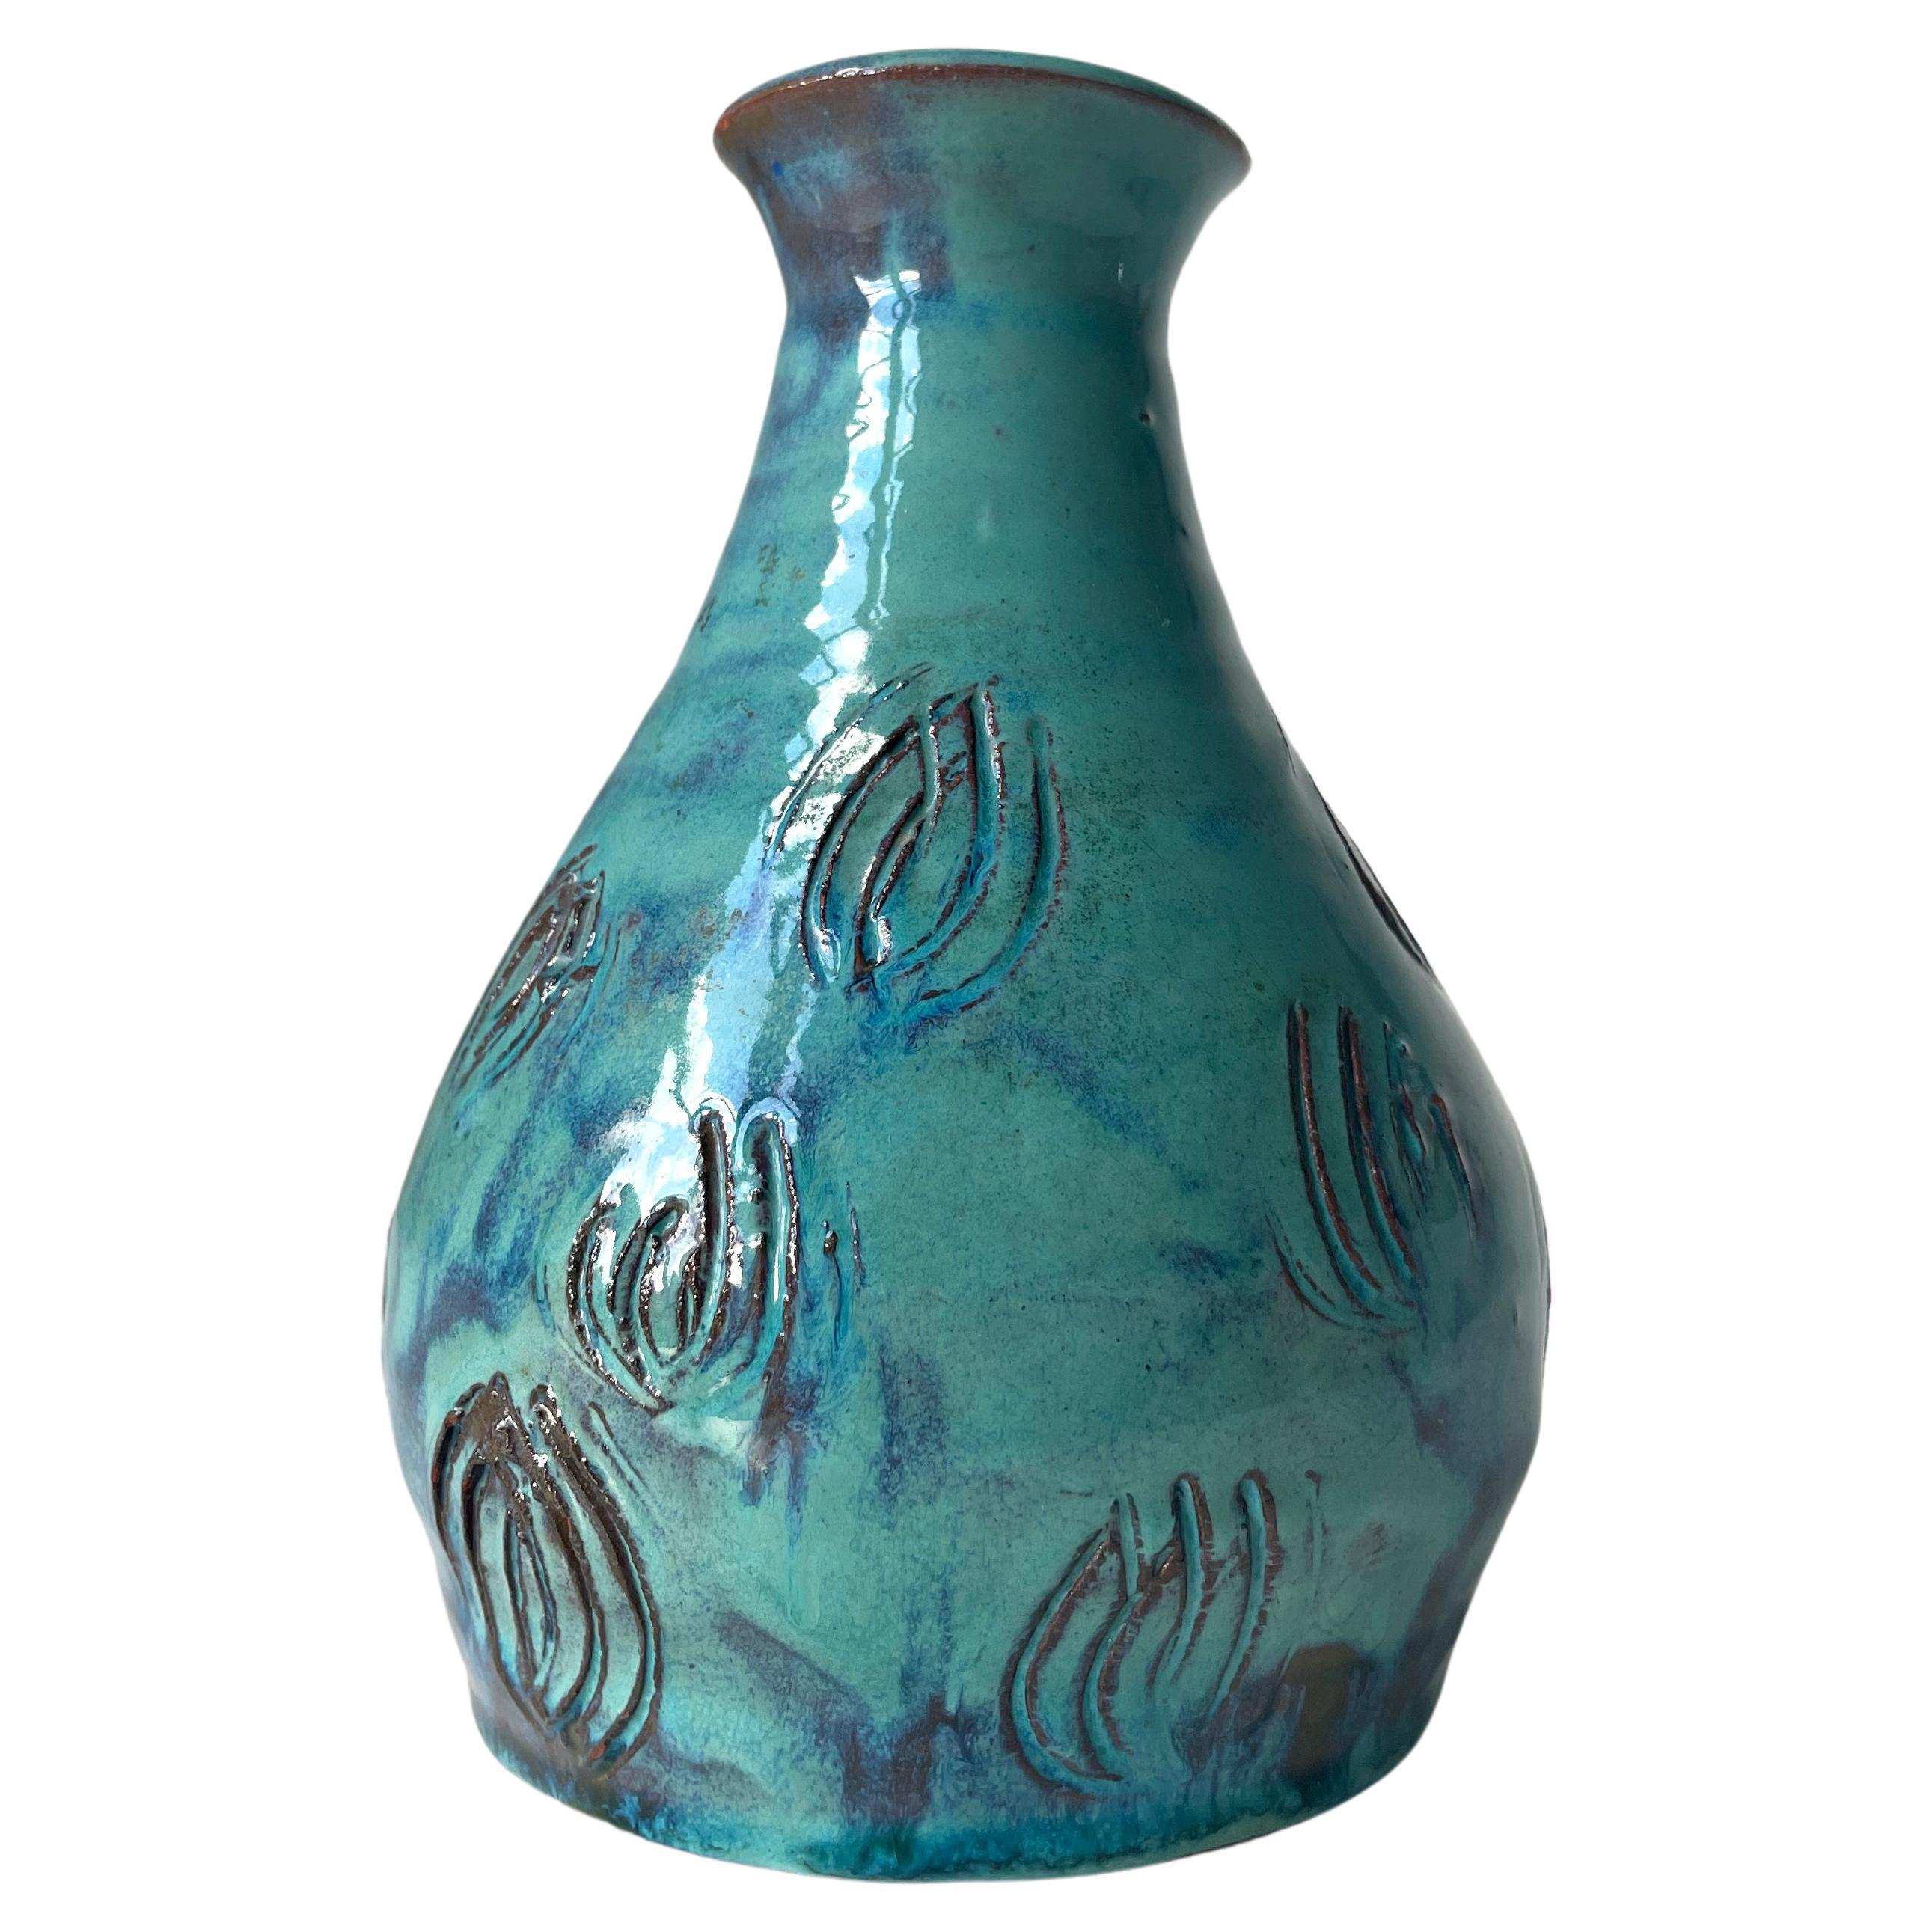 Vintage Turquoise Ceramic Vase with Organic Decor